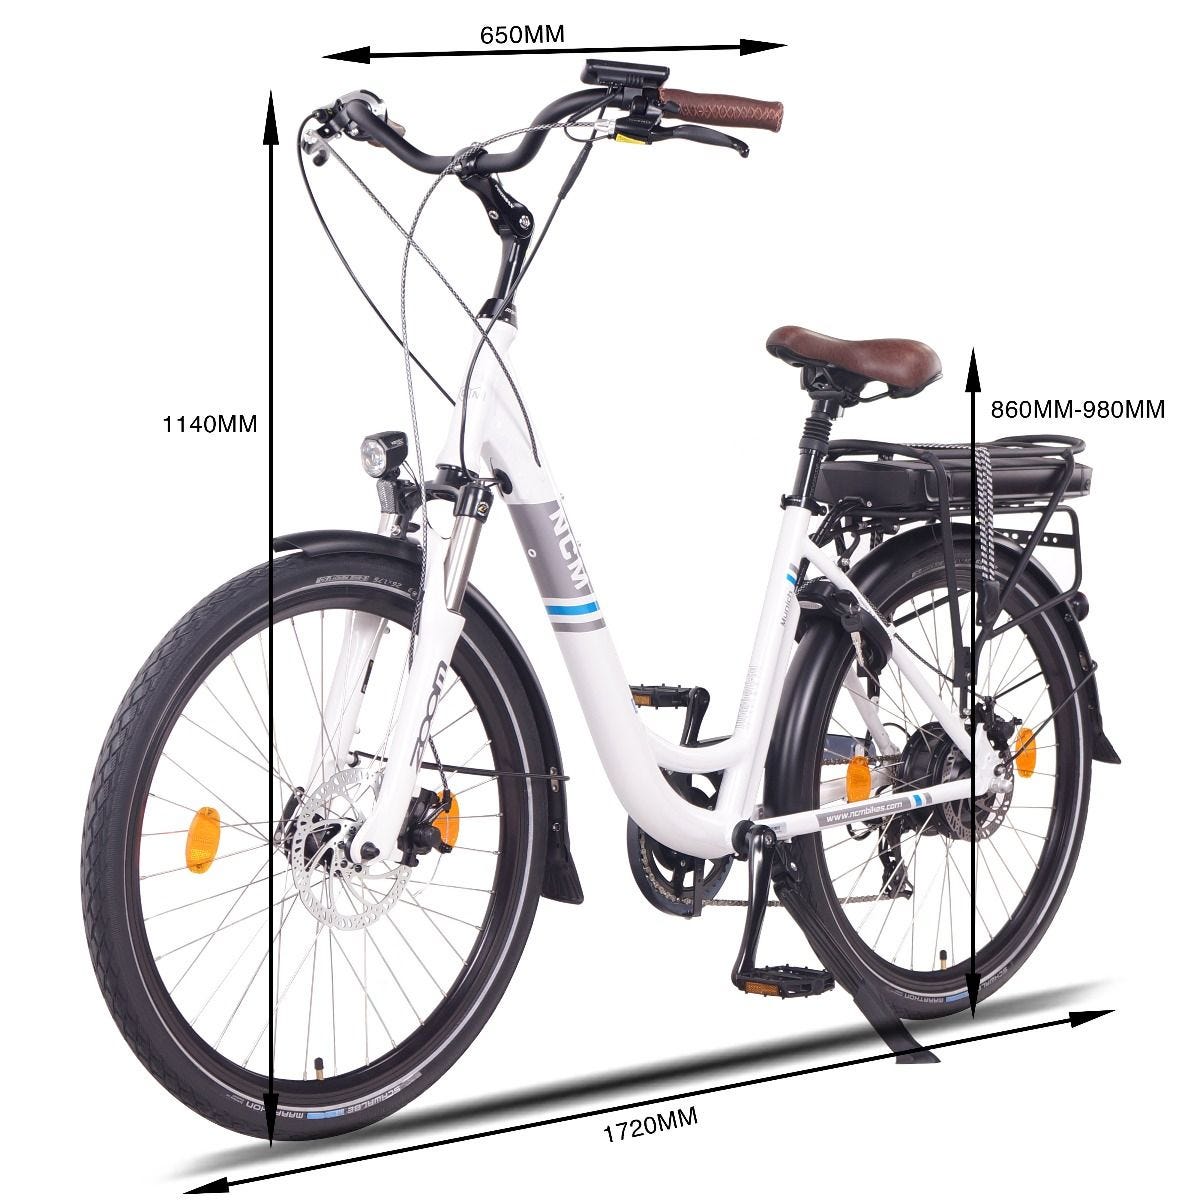 ncm munich electric city bike review